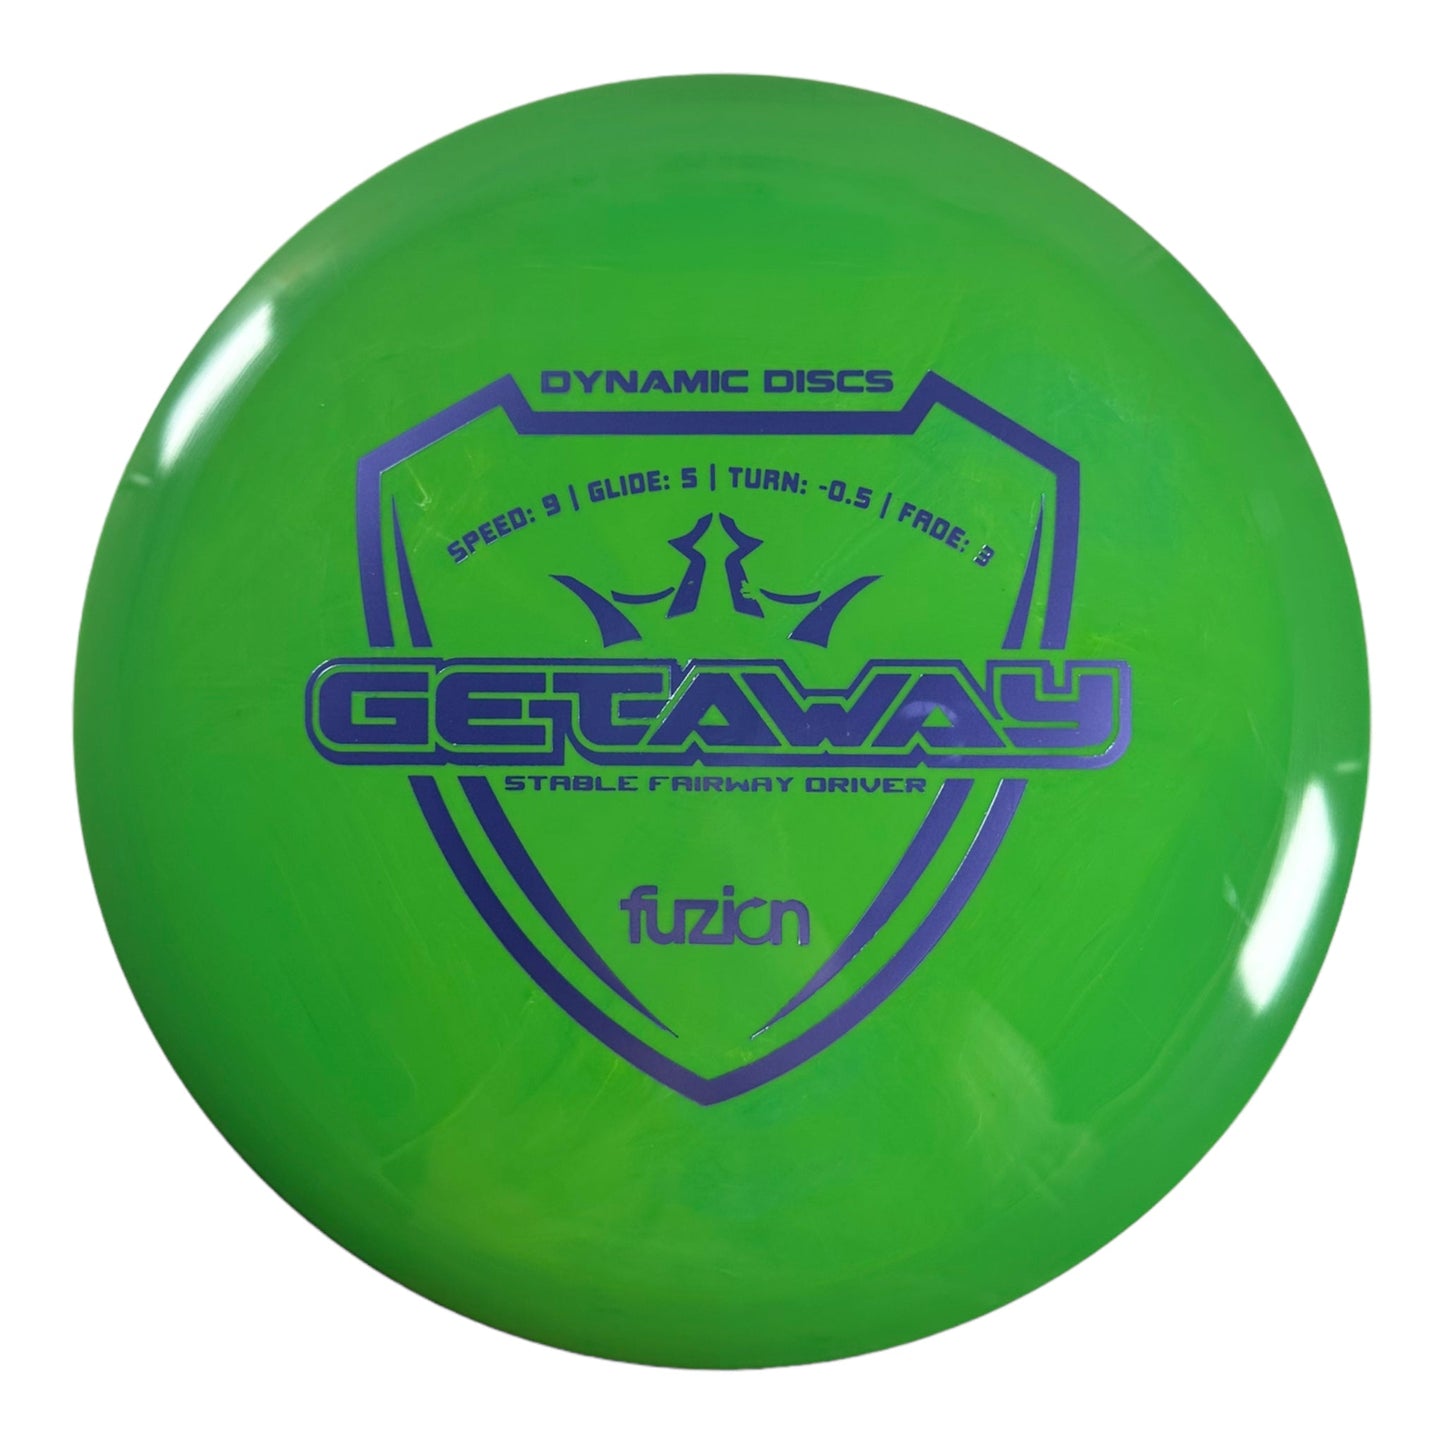 Dynamic Discs Getaway | Fuzion | Green/Purple 175g Disc Golf